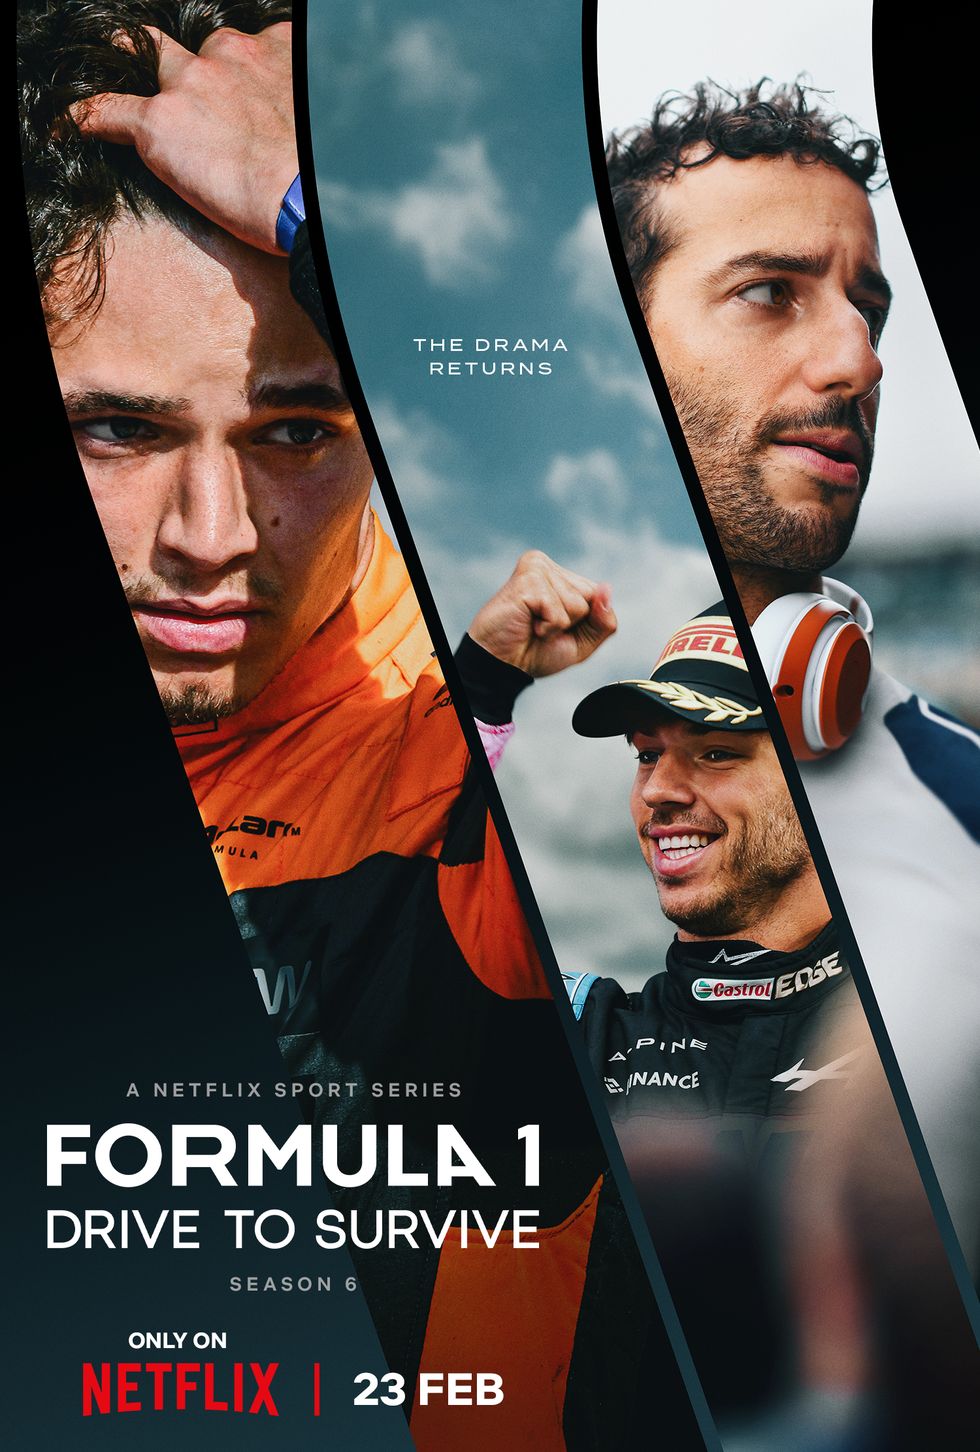 formula 1 drive to survive season 6 poster featuring lando norris, pierre gasly and daniel ricciardo